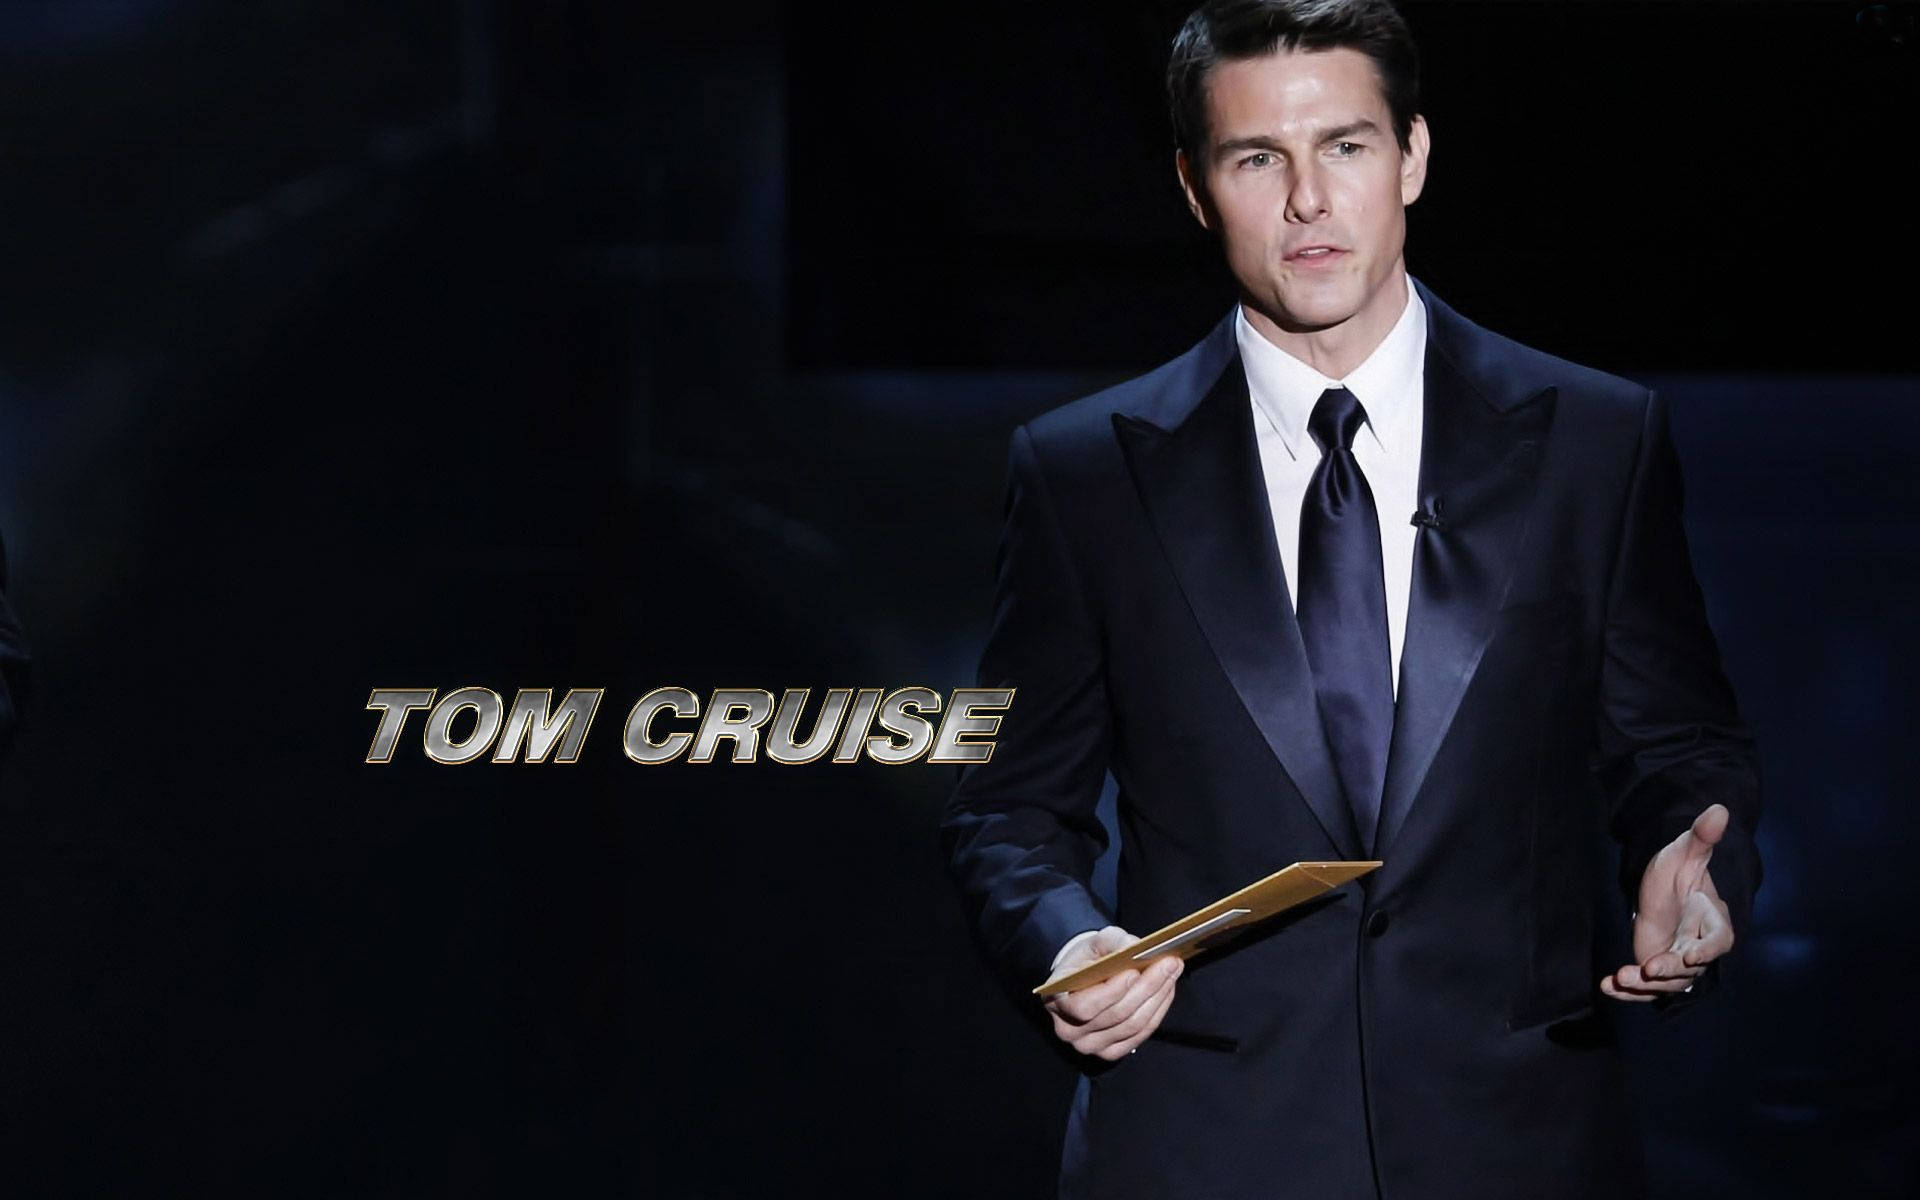 Tom Cruise Wearing Suit